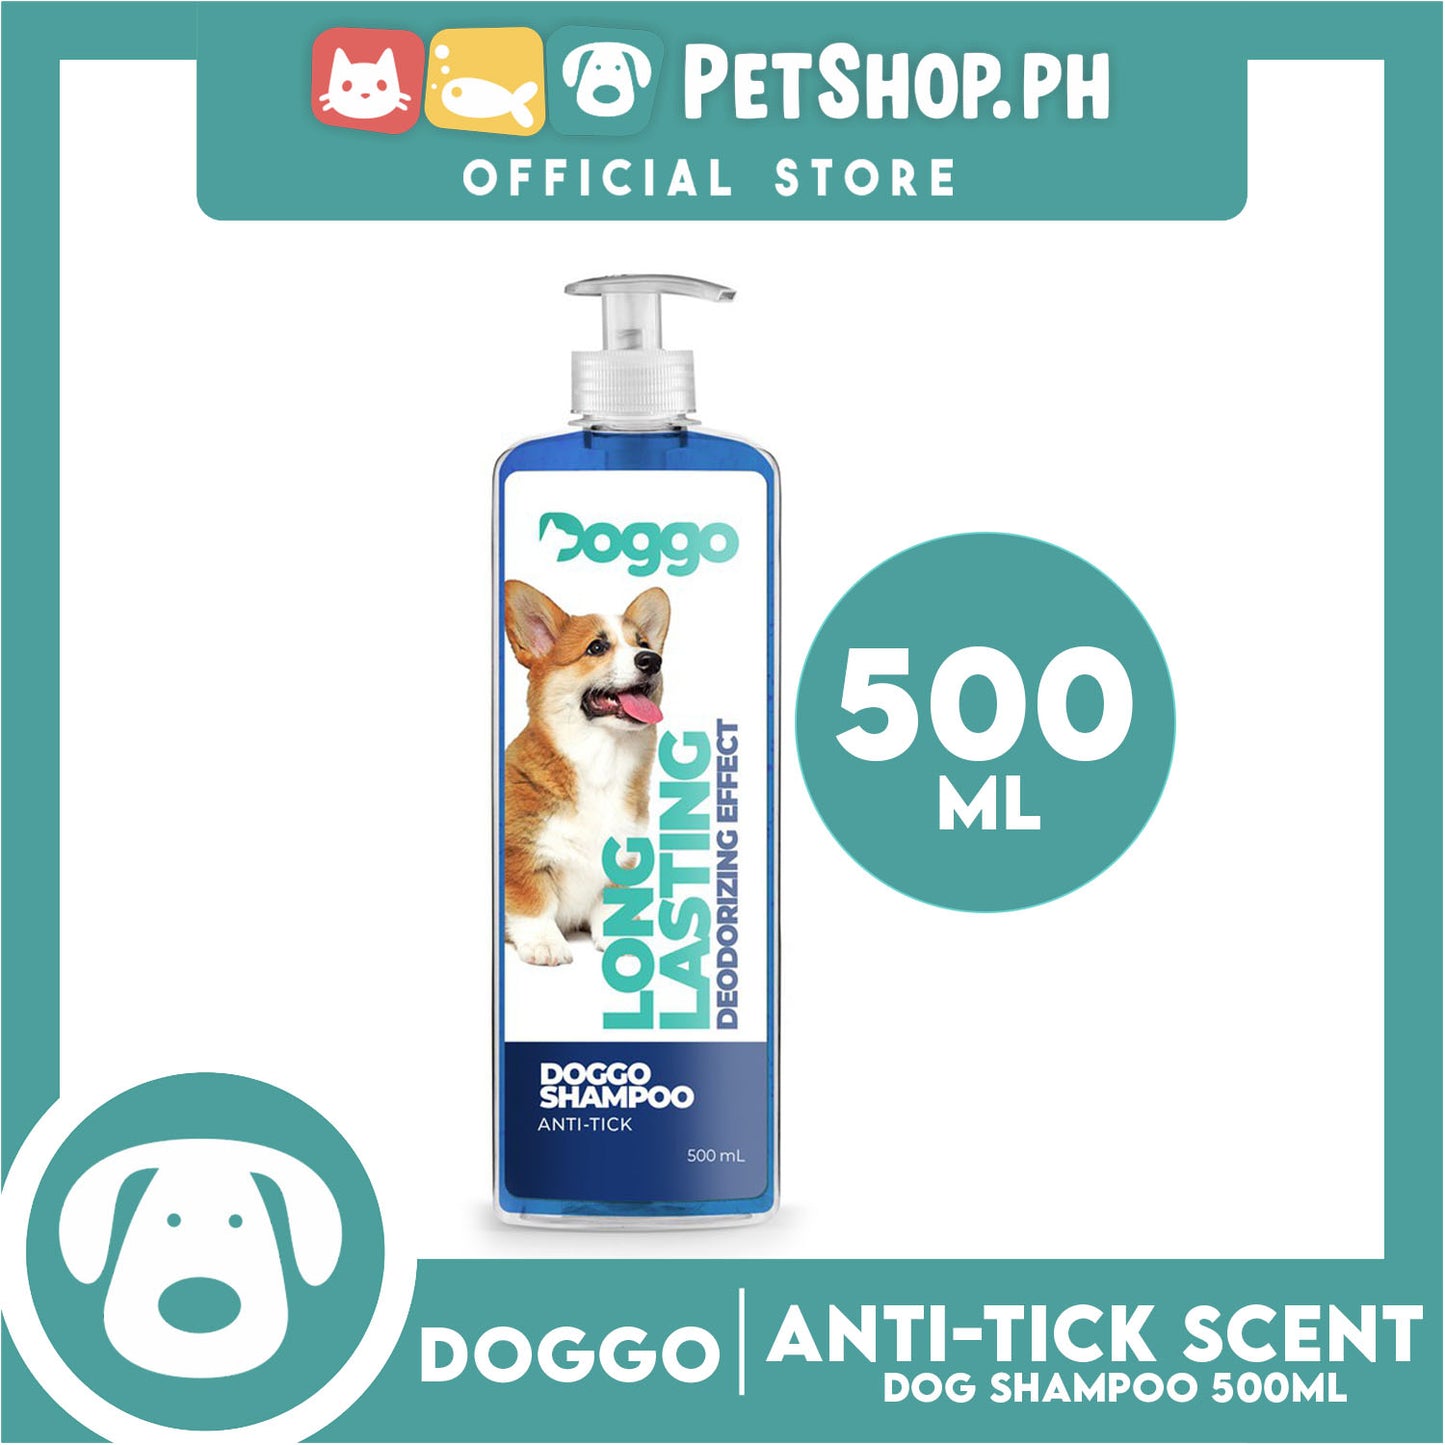 Doggo Shampoo Long Lasting Deodorizing Effect 500ml (Anti-Tick) Shampoo for Your Pet